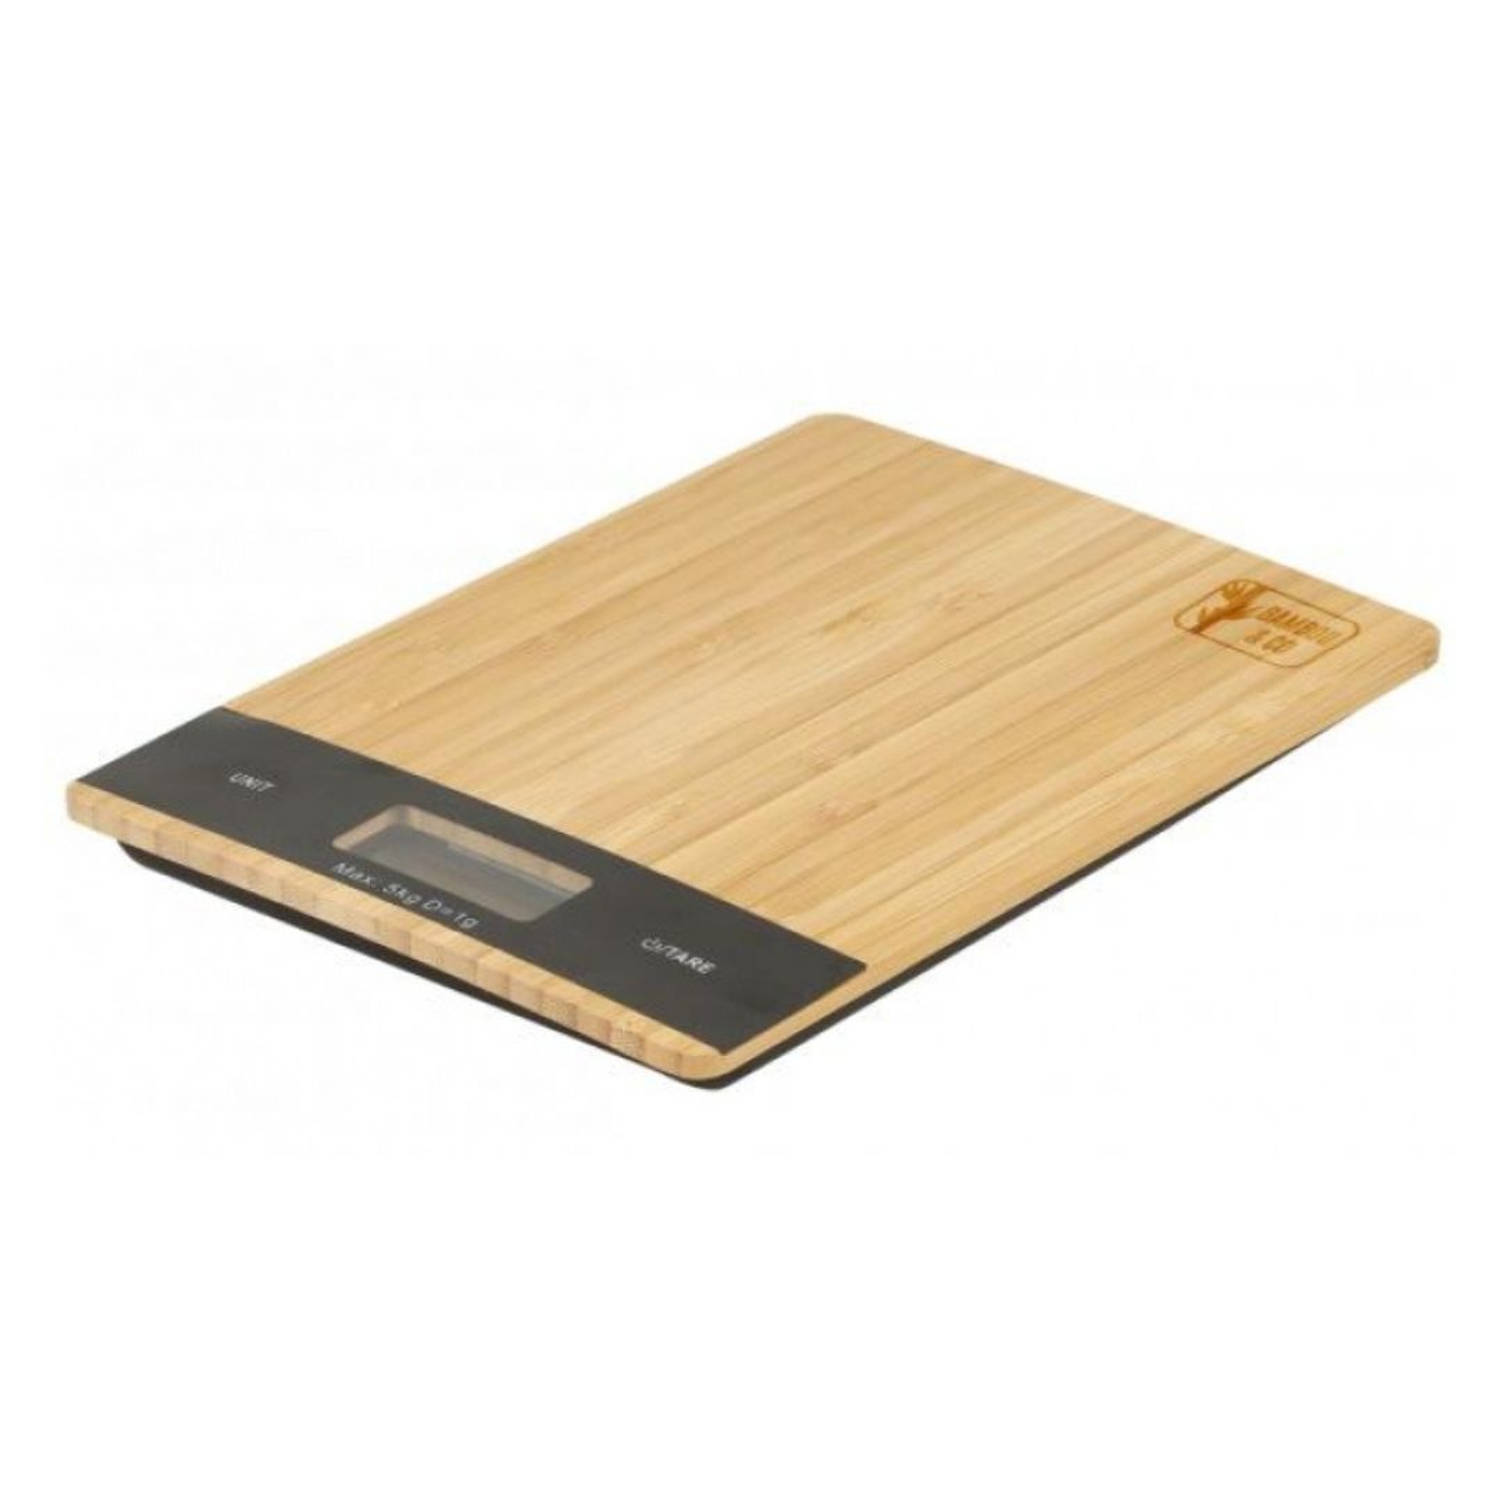 Bambou & Co Keukenweegschaal Snijplank Digitaal Inclusief batterijen Bamboe 21x15cm Bruin